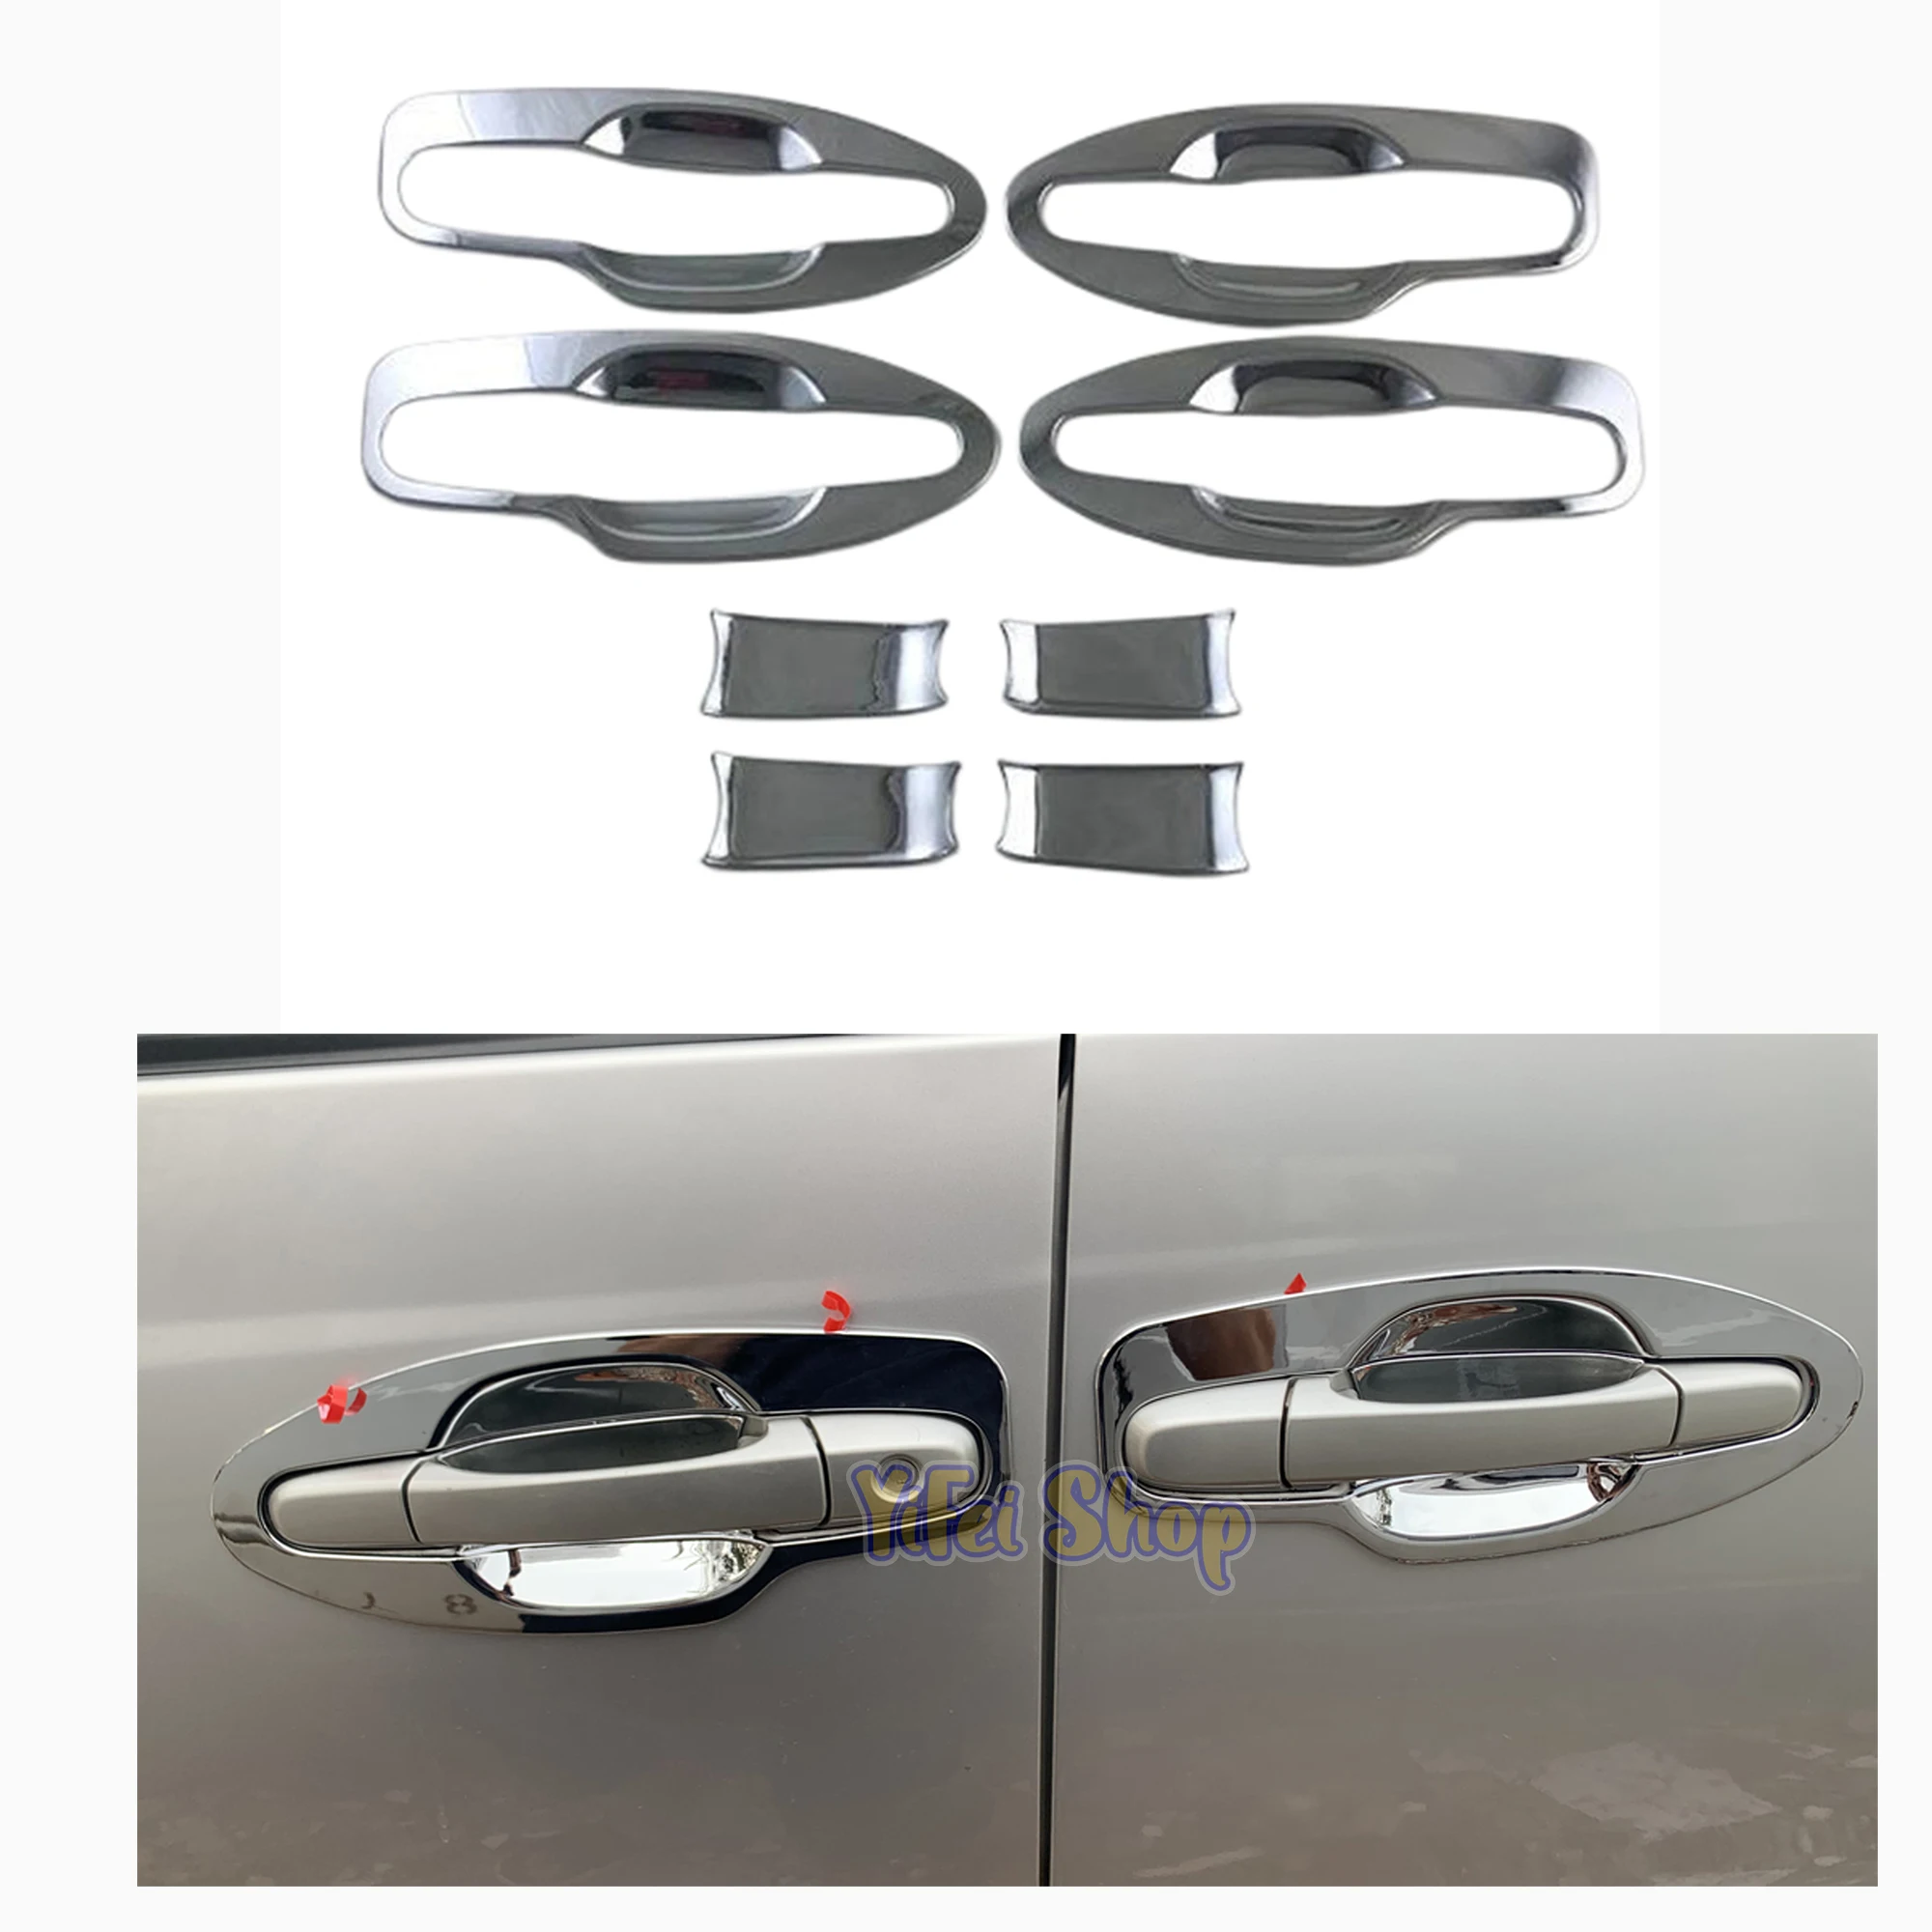 

New ABS Chrome Retrofit Car Accessory Door Handle Bowl Covers Trim Paste Style For Lexus Rx300 XU110 RX 300 Is300 1998 - 2003